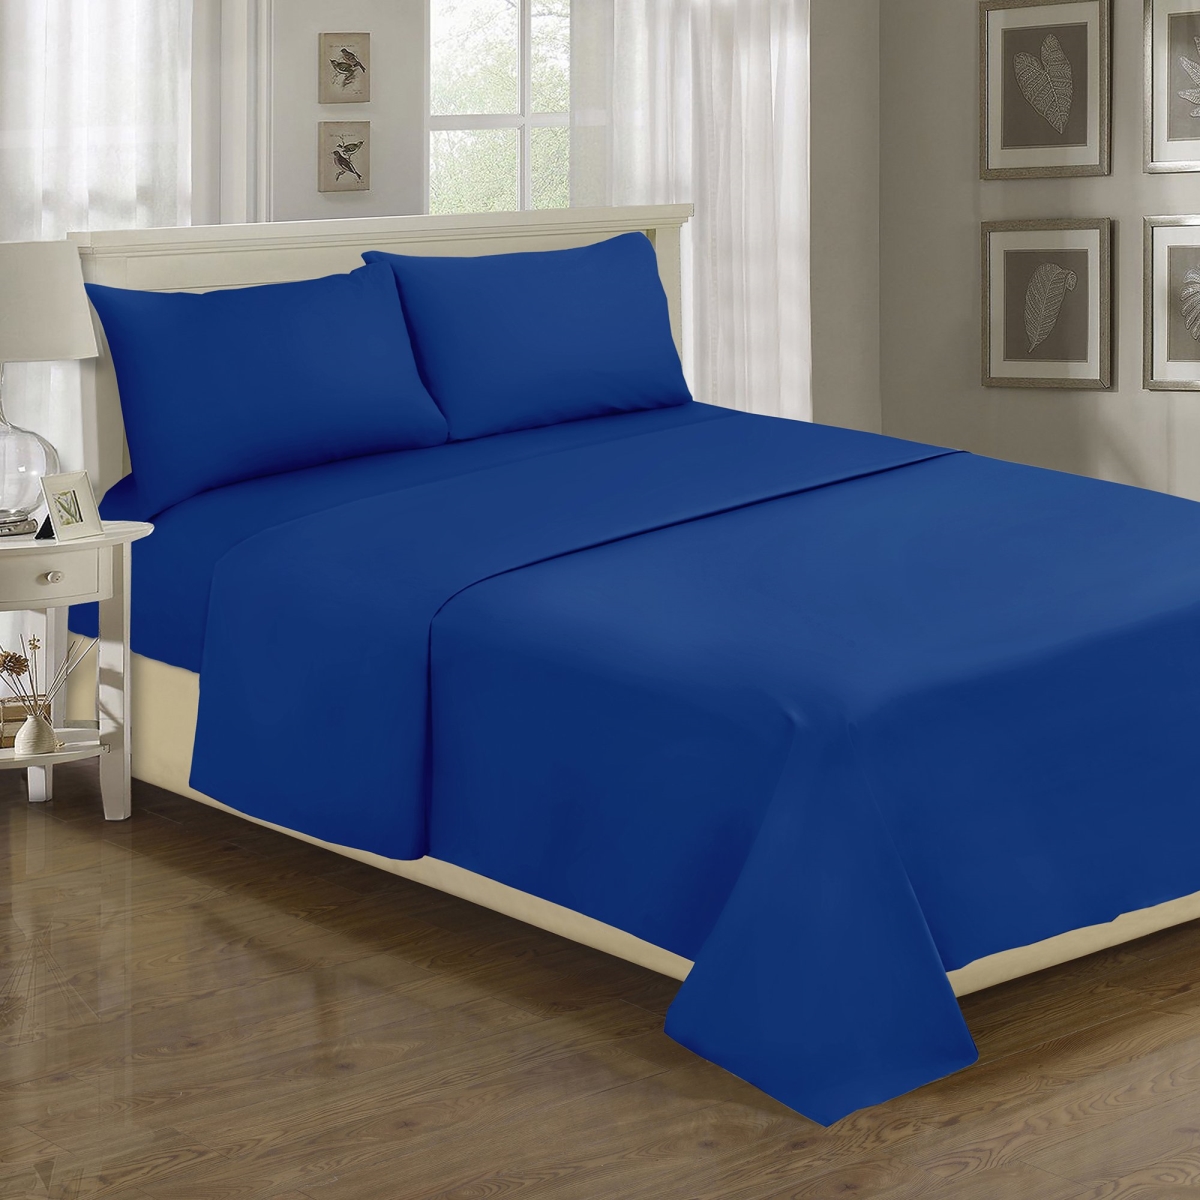 Millano Spa 1200tc Sheet Set, Blue - Double Size